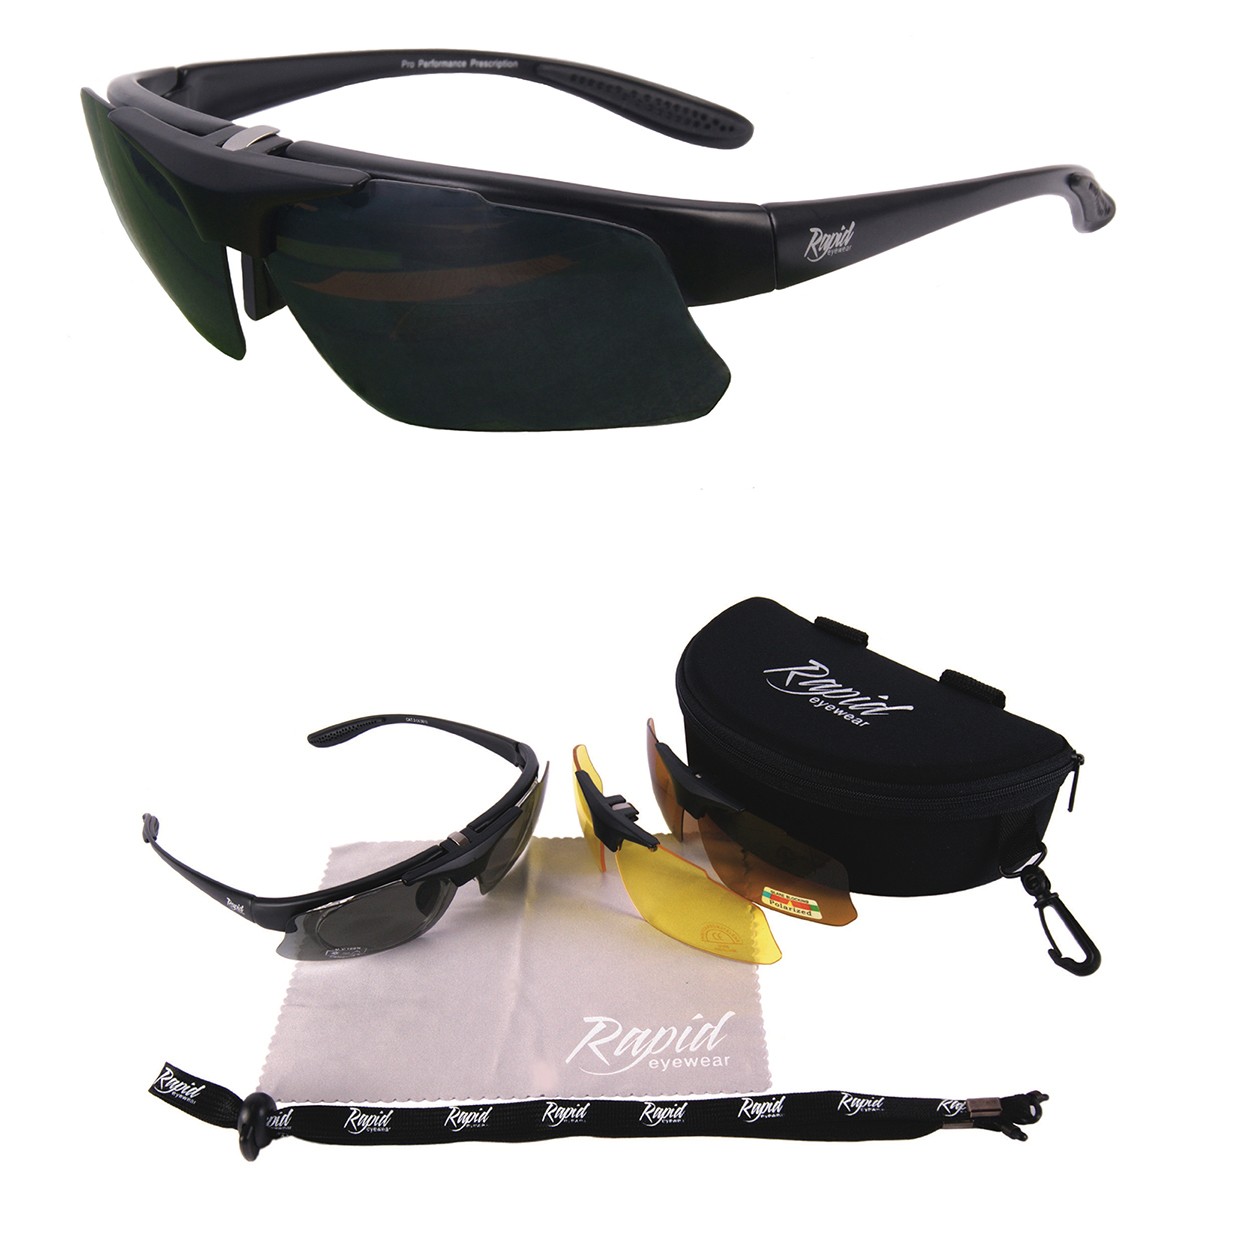 Remaldi polarised fishing glasses UV400 Bifocal wrap around Strength 2.50 Eyes